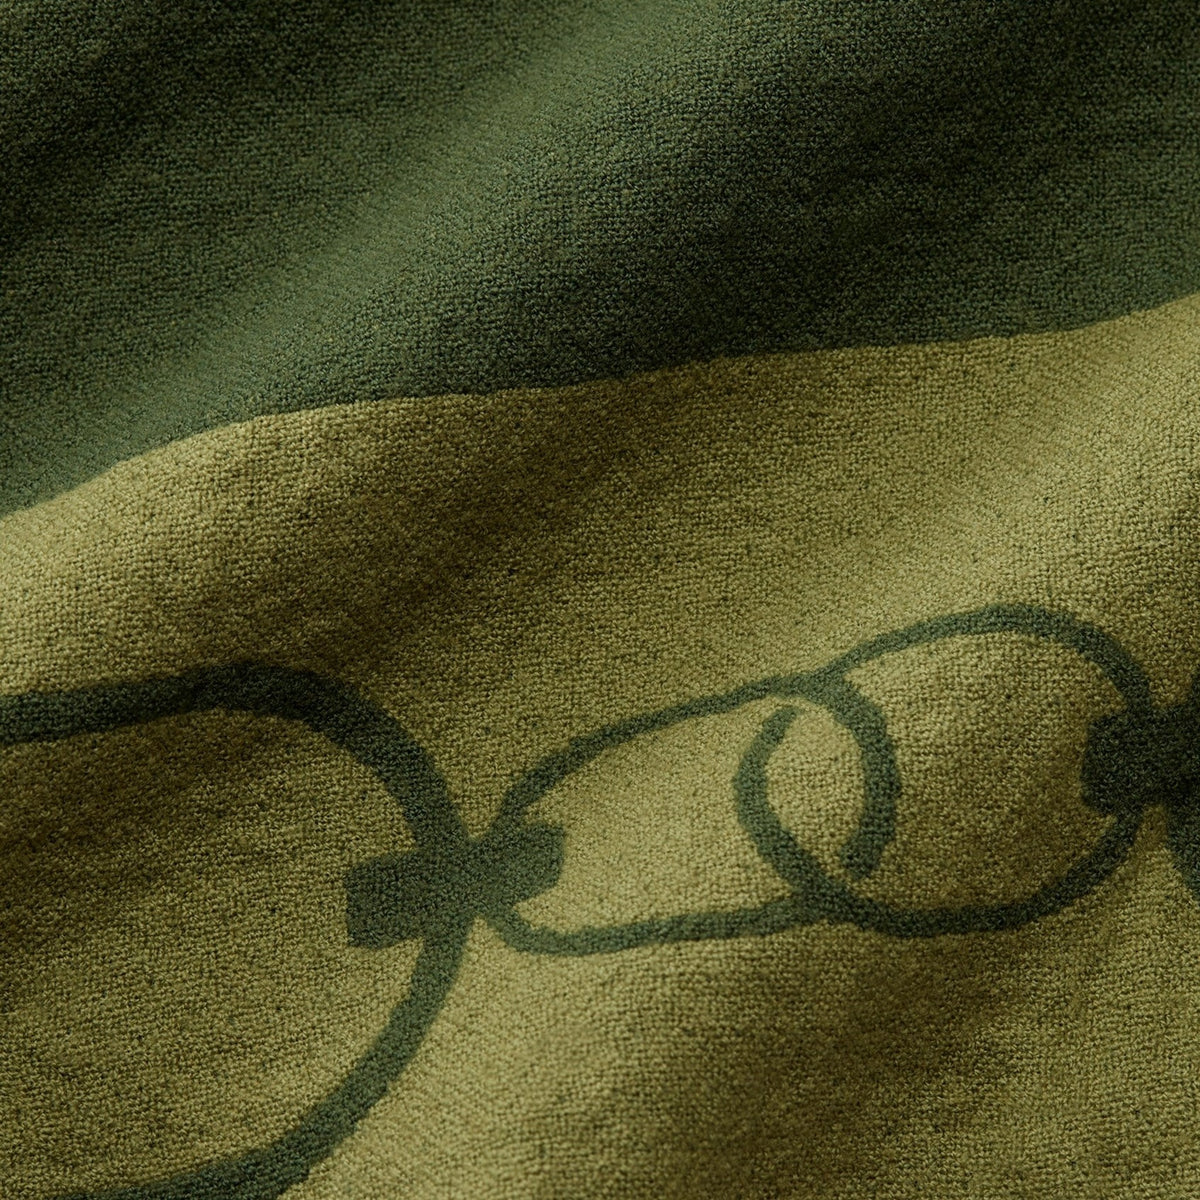 Swatch Sample of Sferra Eterna Throw Blanket in Willow Color